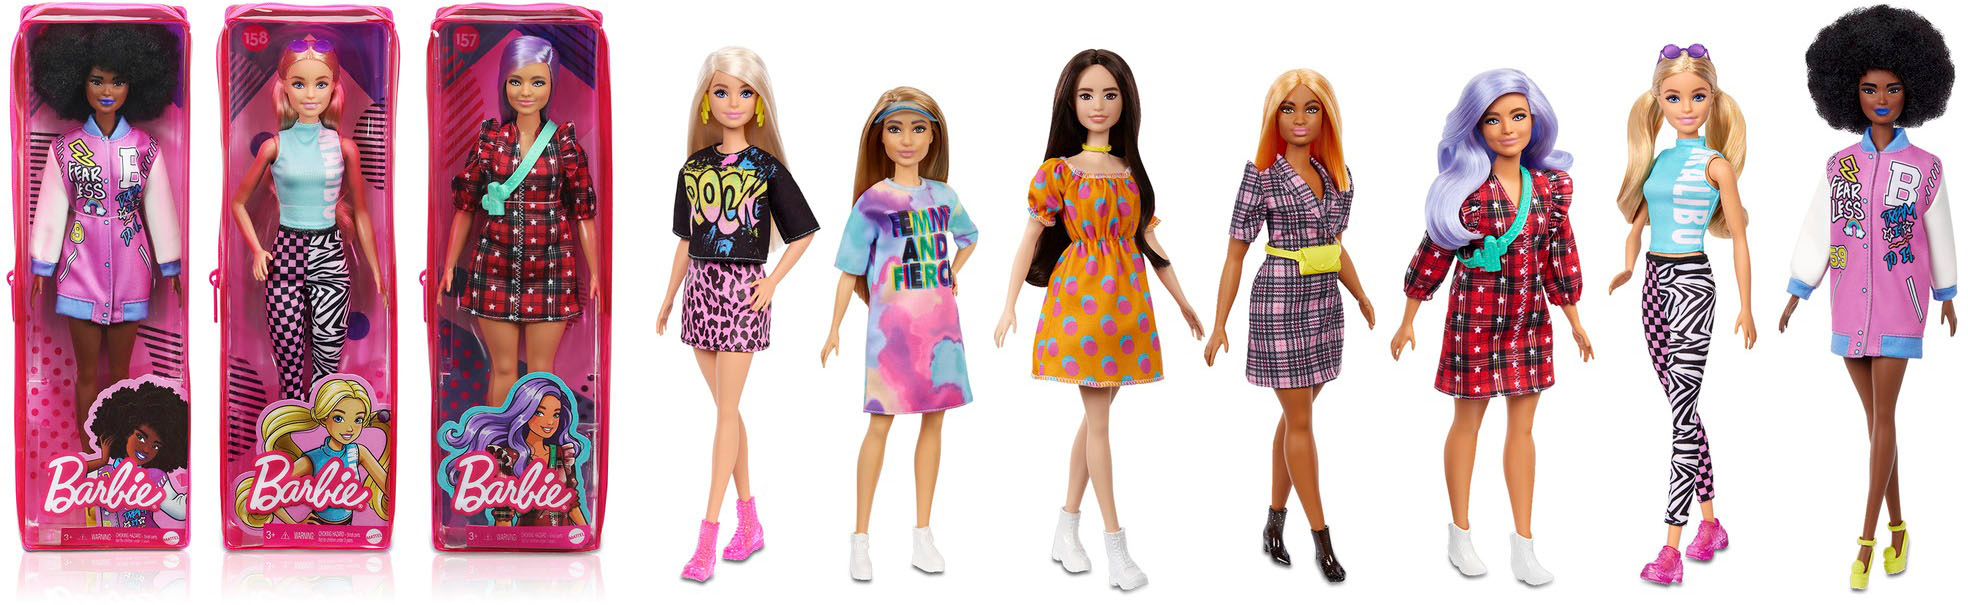 barbie 2018 fashionistas